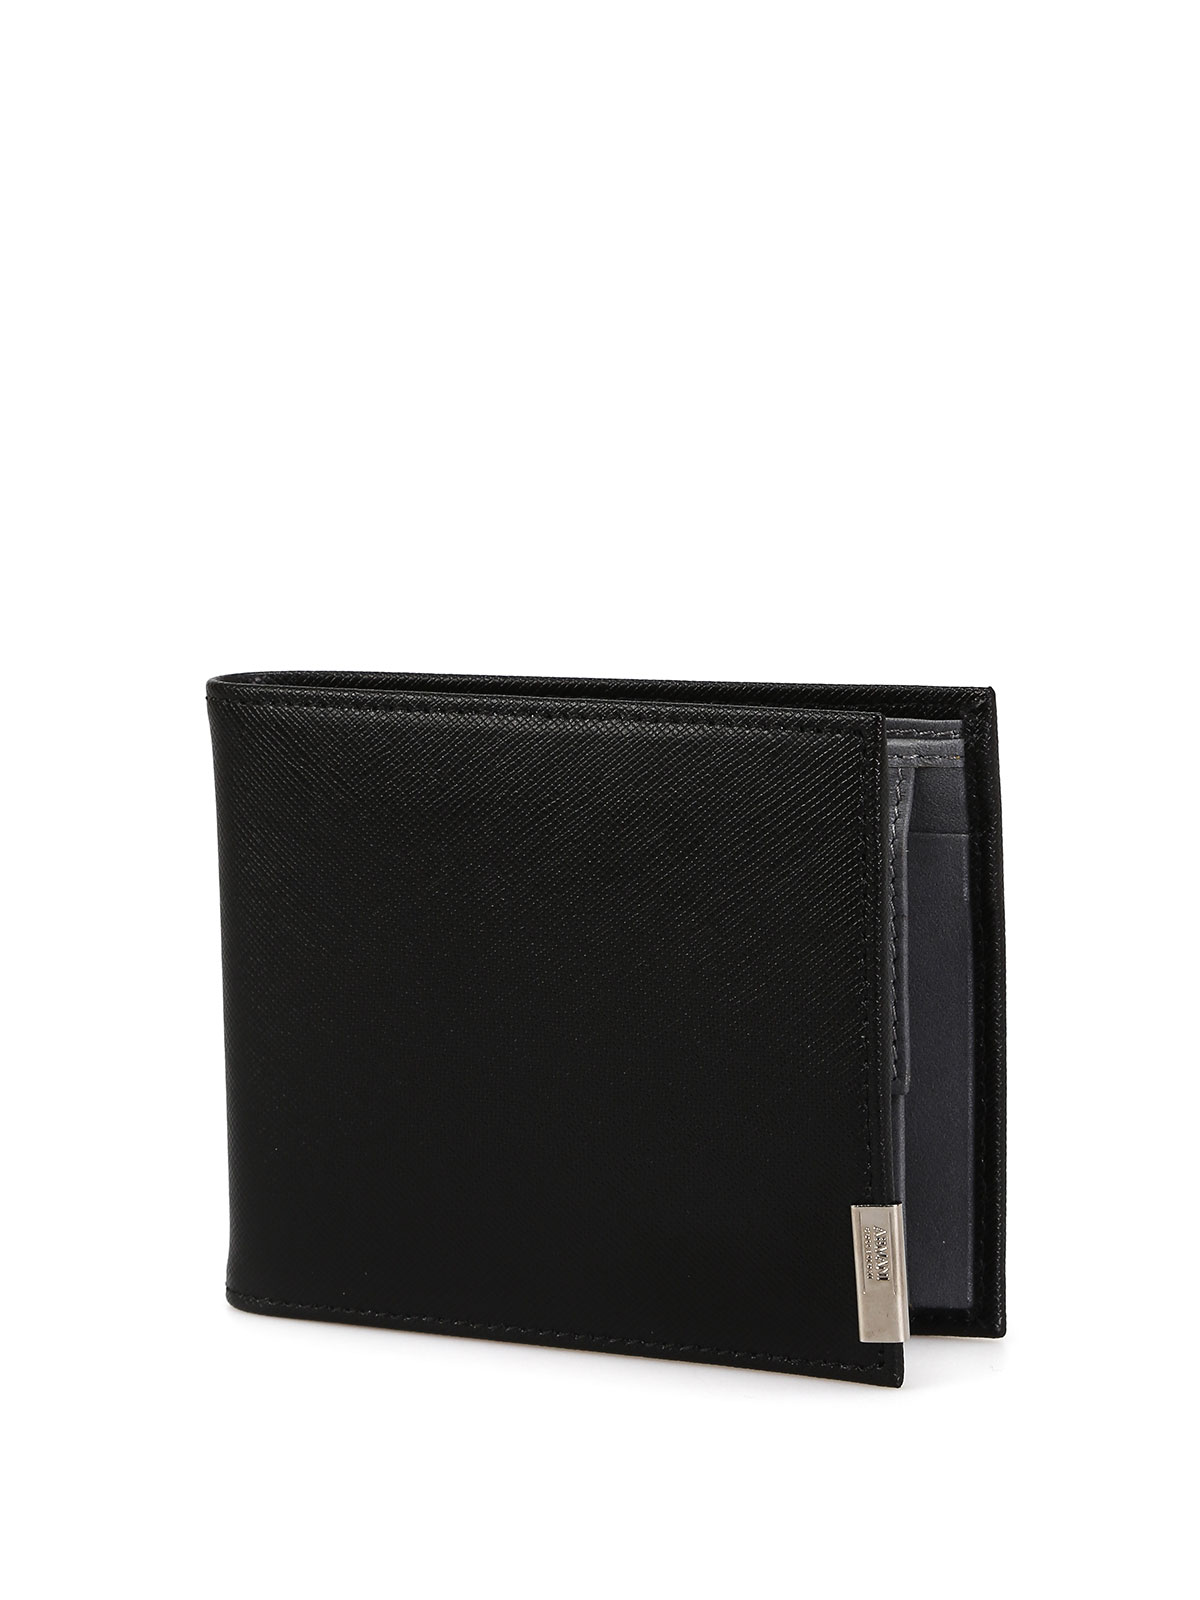 Wallets & purses Armani Collezioni - Leather wallet - AIV02V312